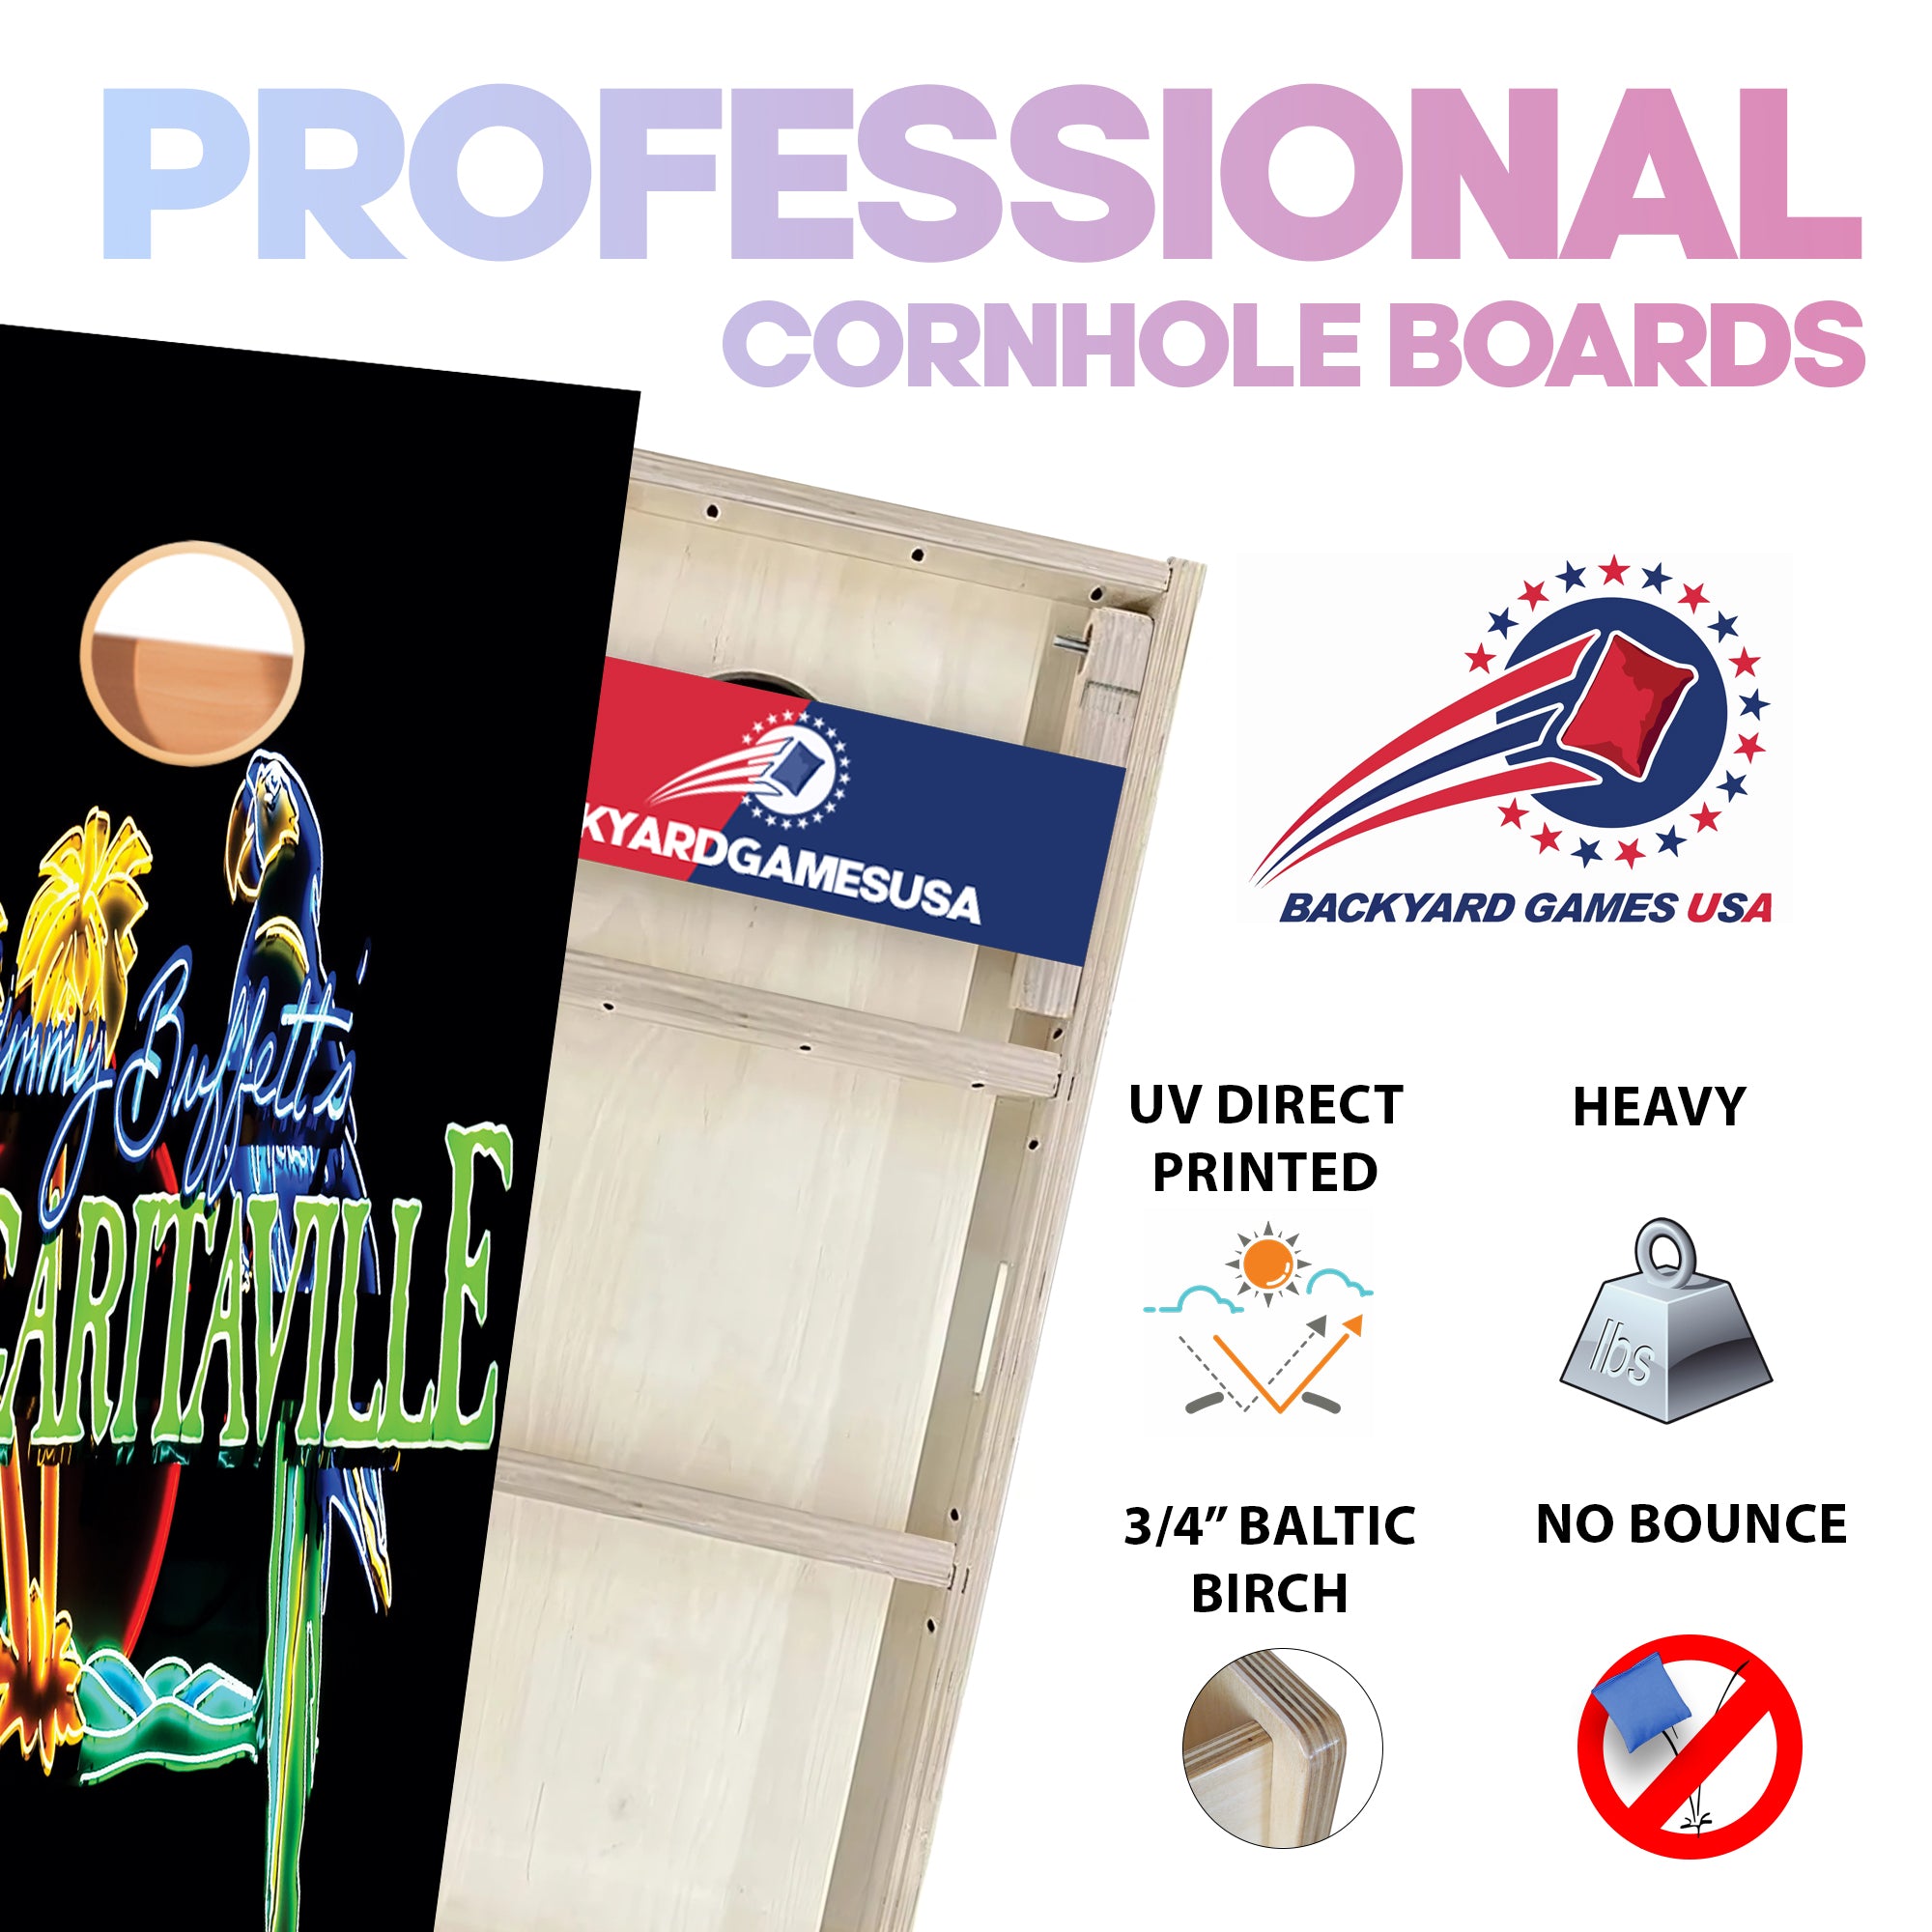 Margaritaville Professional Cornhole Boards